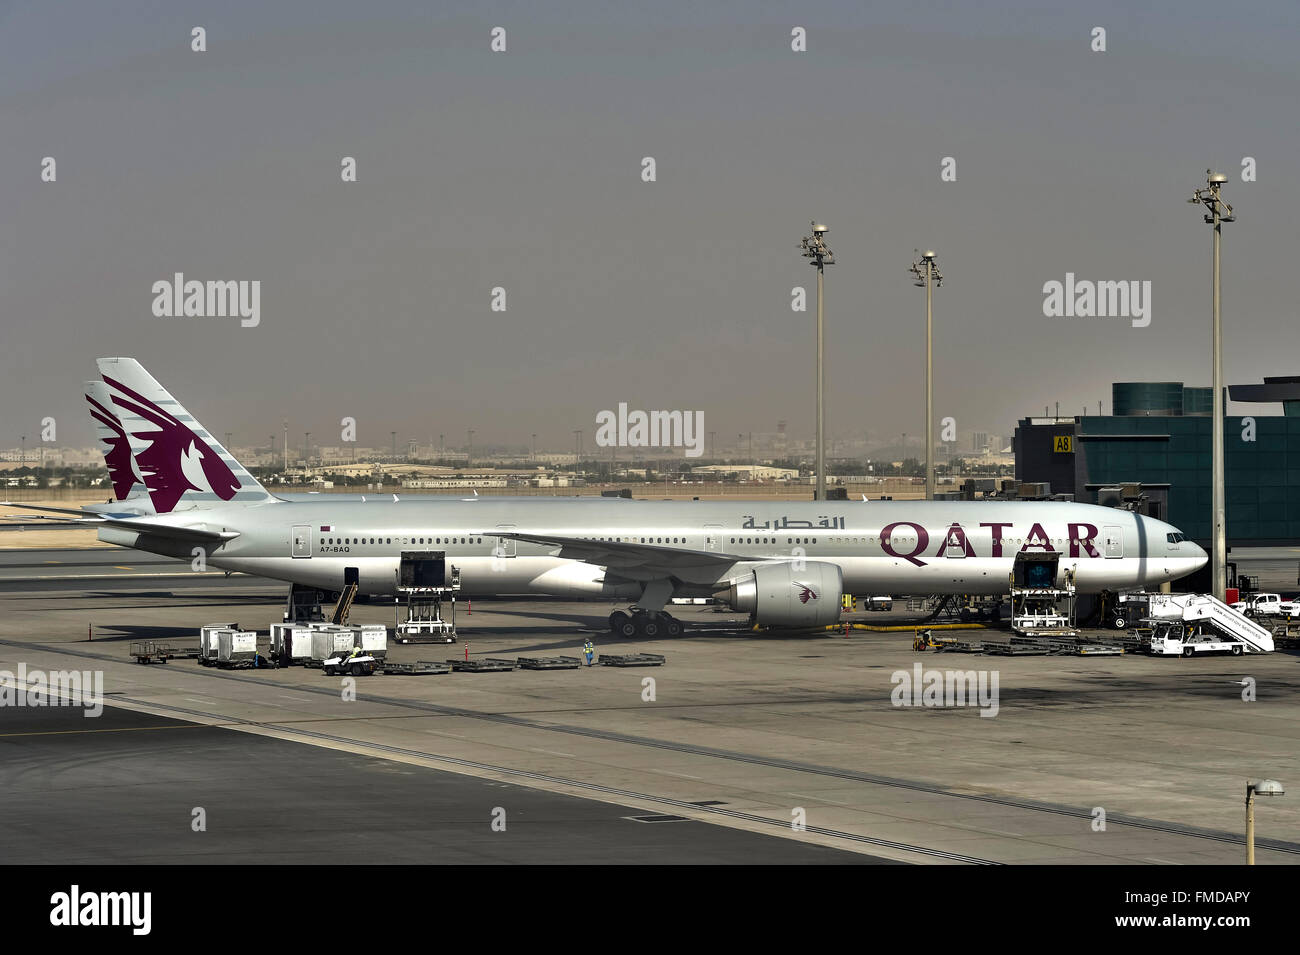 Qatar Airways Boeing 777, Hamad Aeroporto Internazionale di Doha, in Qatar Foto Stock